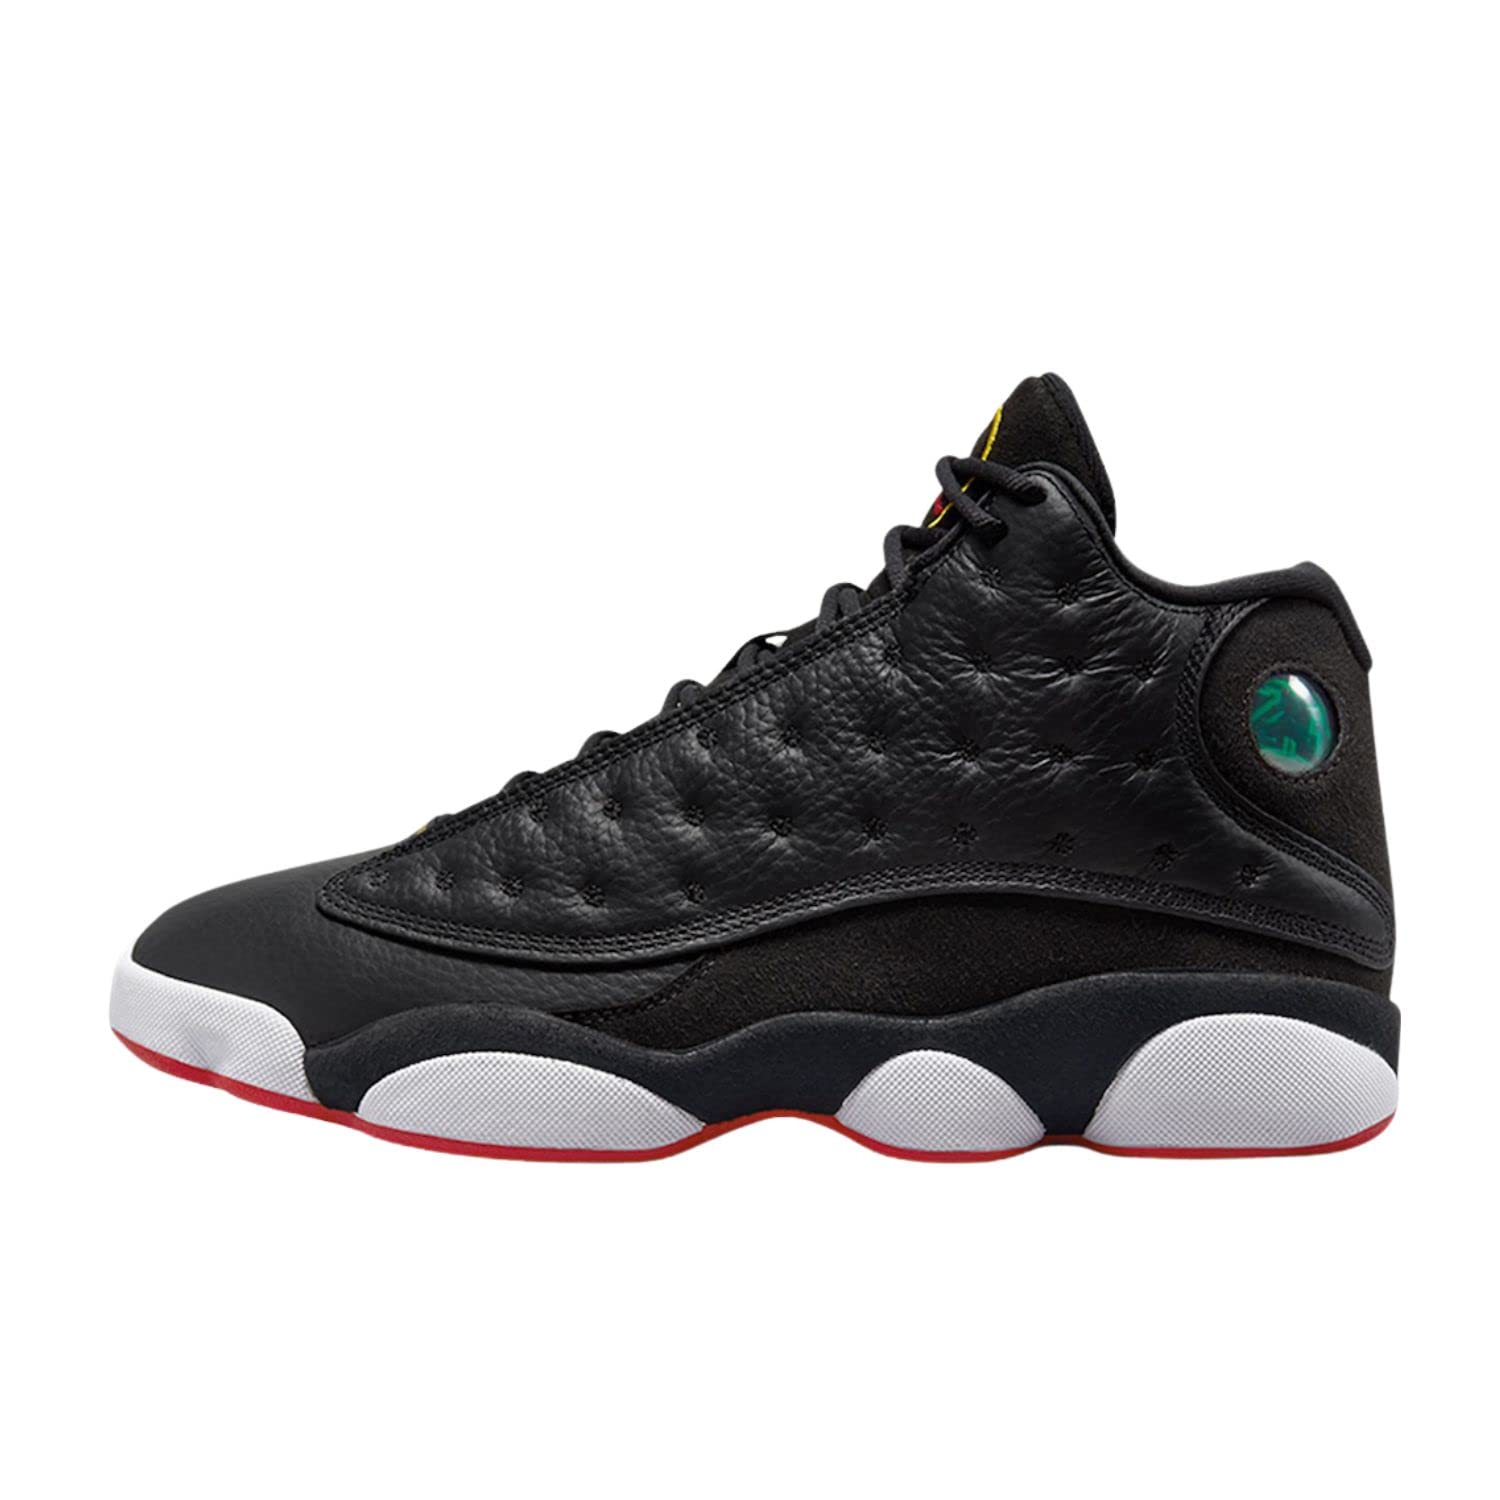 Jordan 13 Retro Mens Shoes (Black/Tour Red-White, us_Footwear_Size_System, Adult, Men, Numeric, Medium, Numeric_7) - Caps Fitted